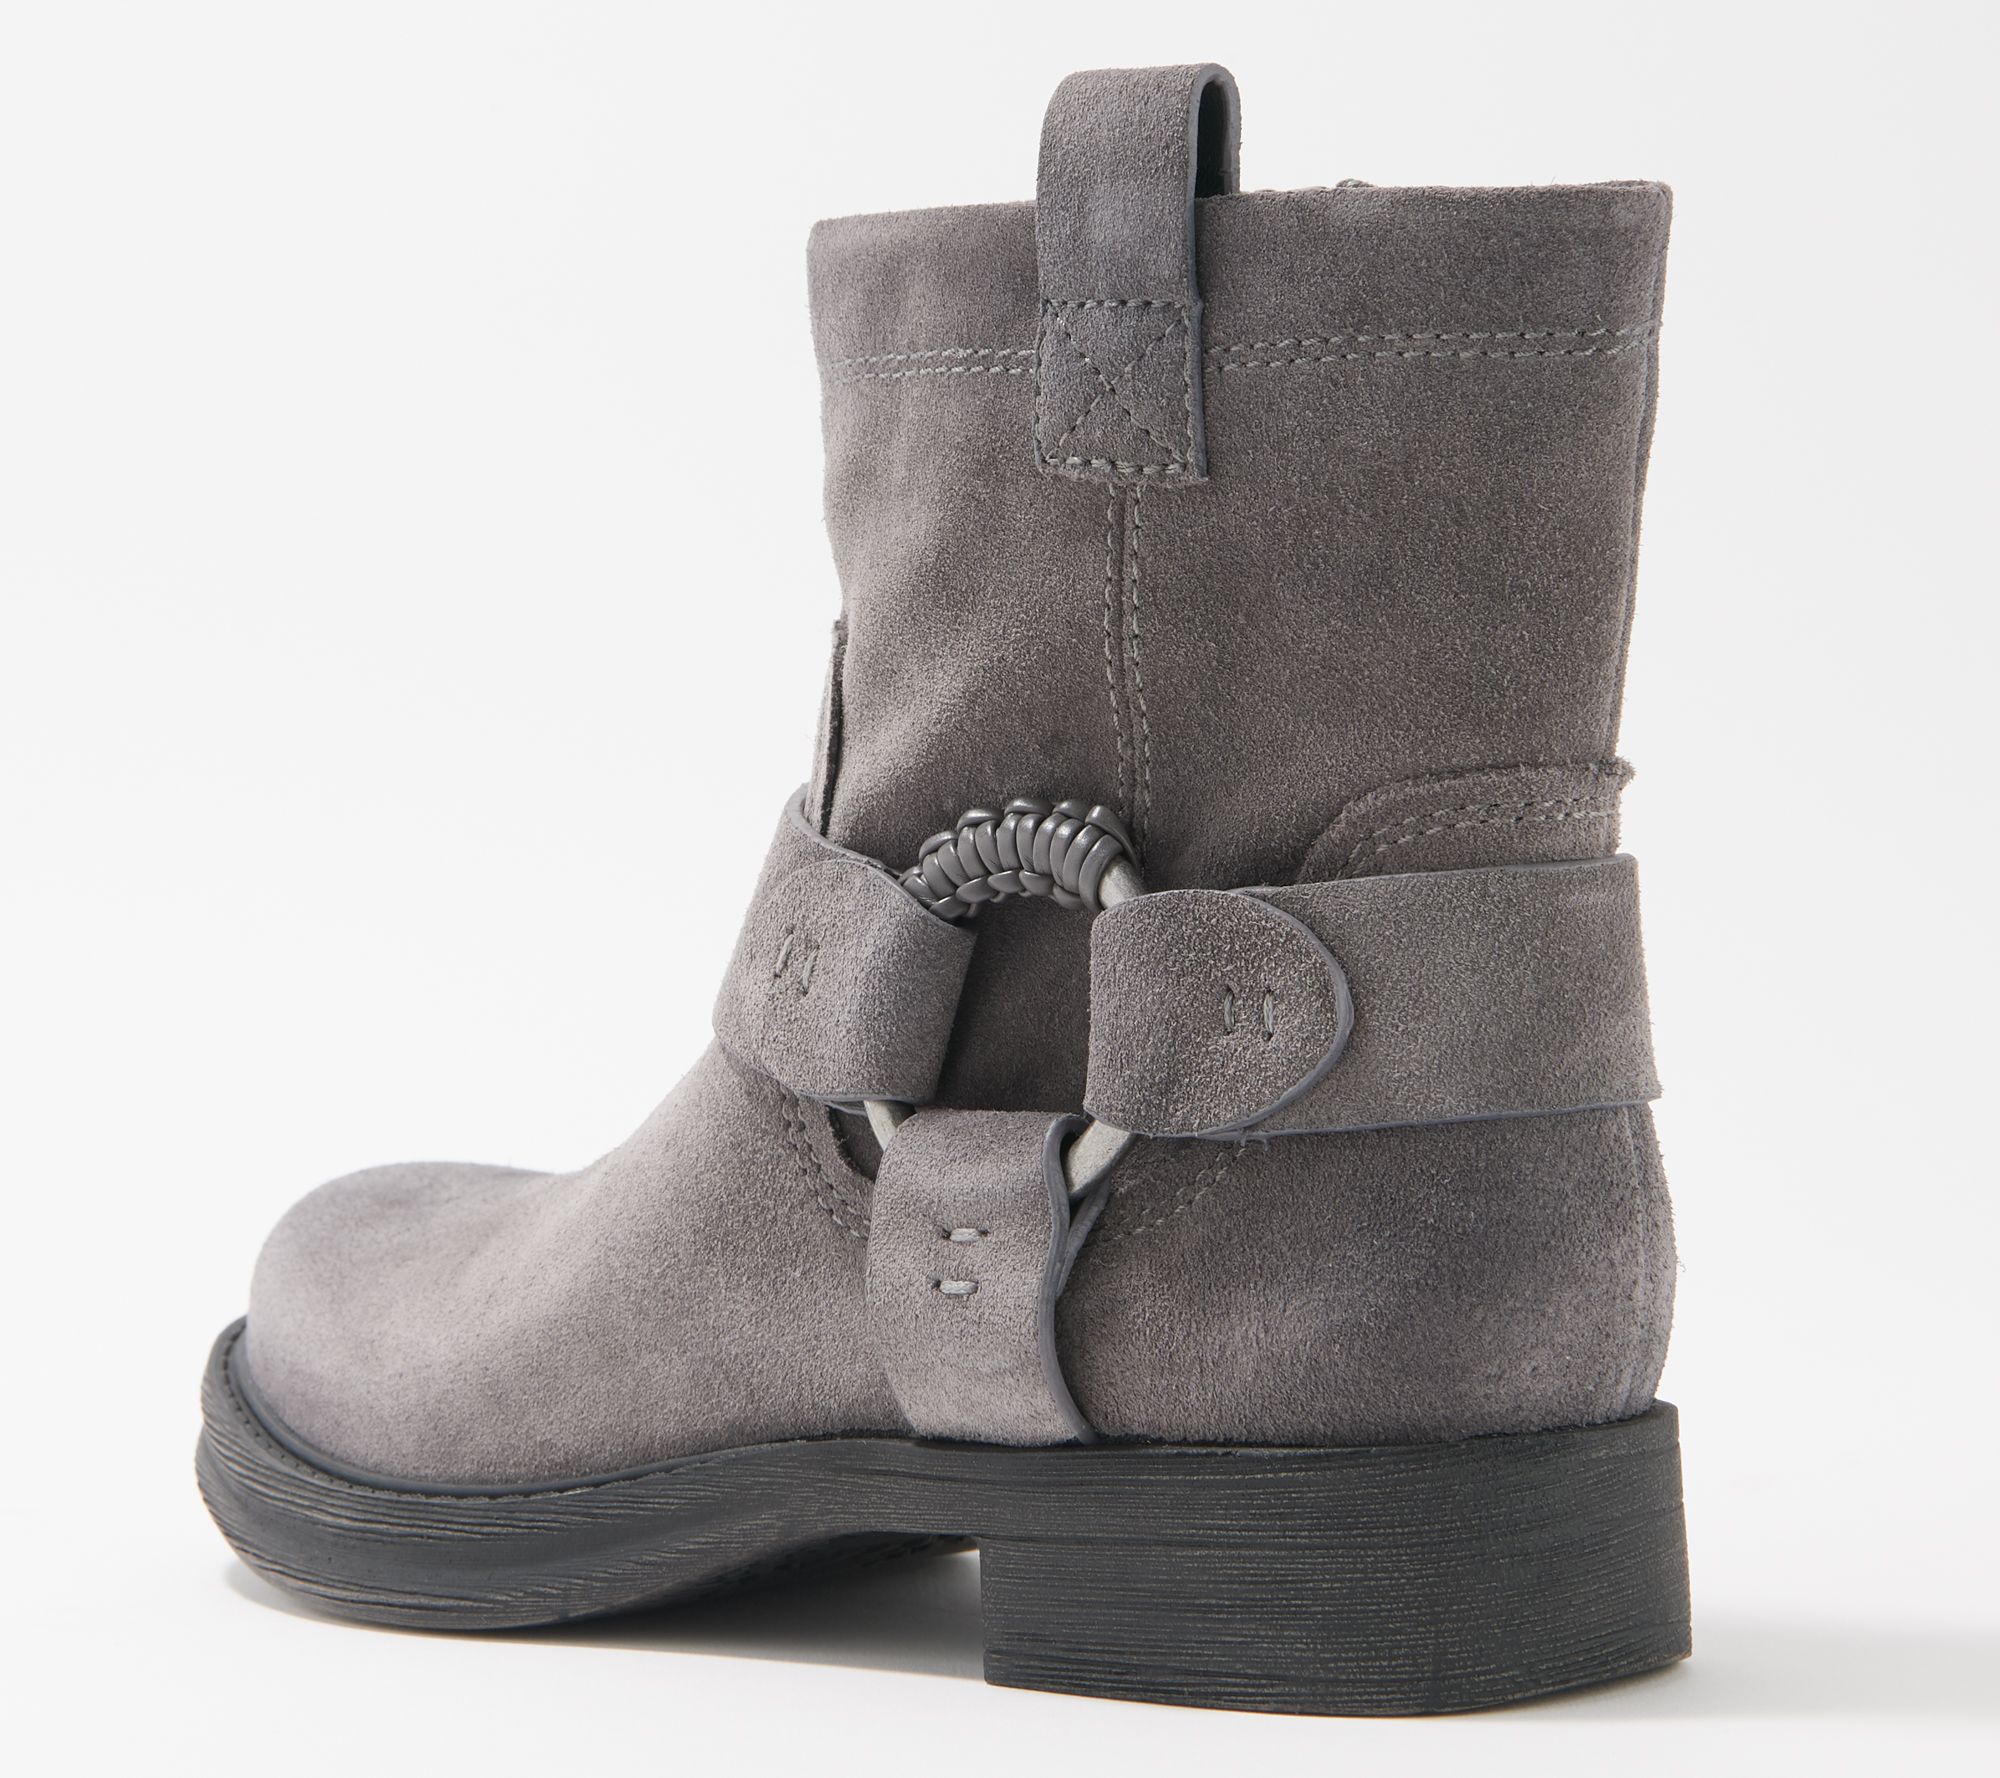 Zodiac Leather Ankle Boots - Fiera - QVC.com